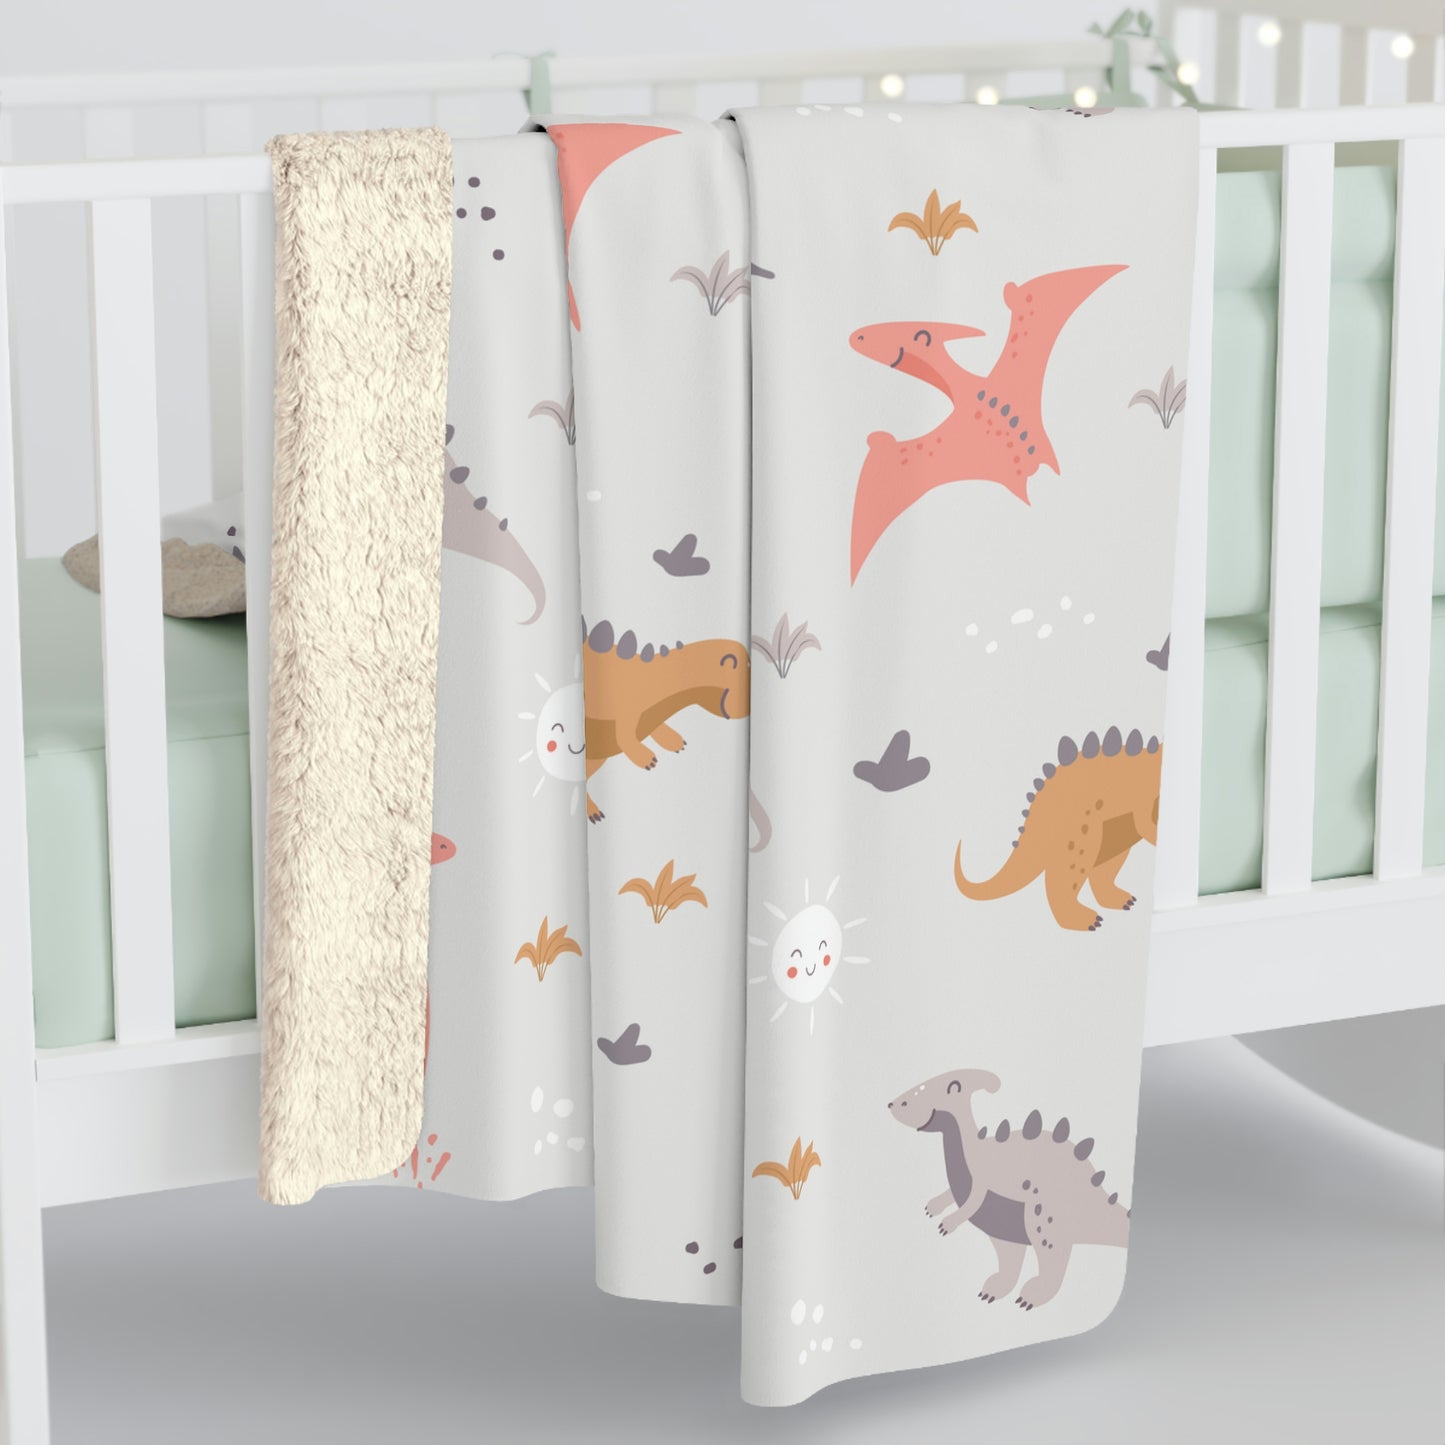 dinosaur sherpa blanket for kids room or nursery, dinosaur baby nursery sherpa blanket 